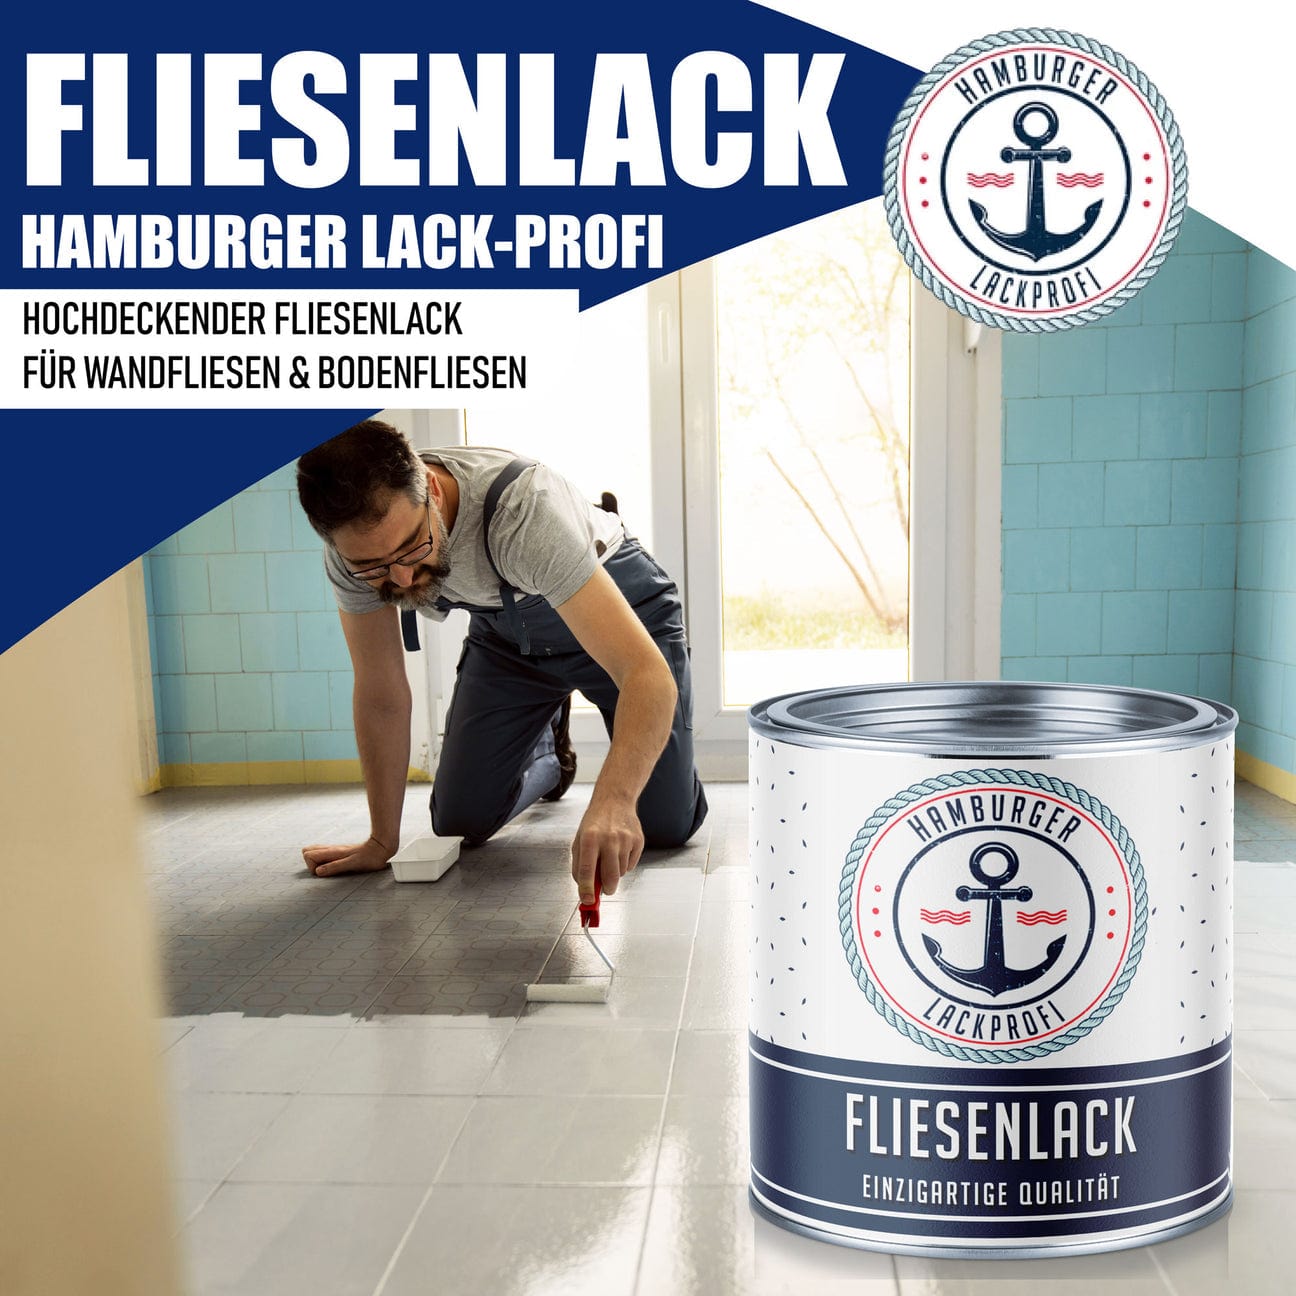 Hamburger Lack-Profi Hamburger Lack-Profi Fliesenlack Gelbgrau RAL 7034 - hochdeckende Fliesenfarbe Grau